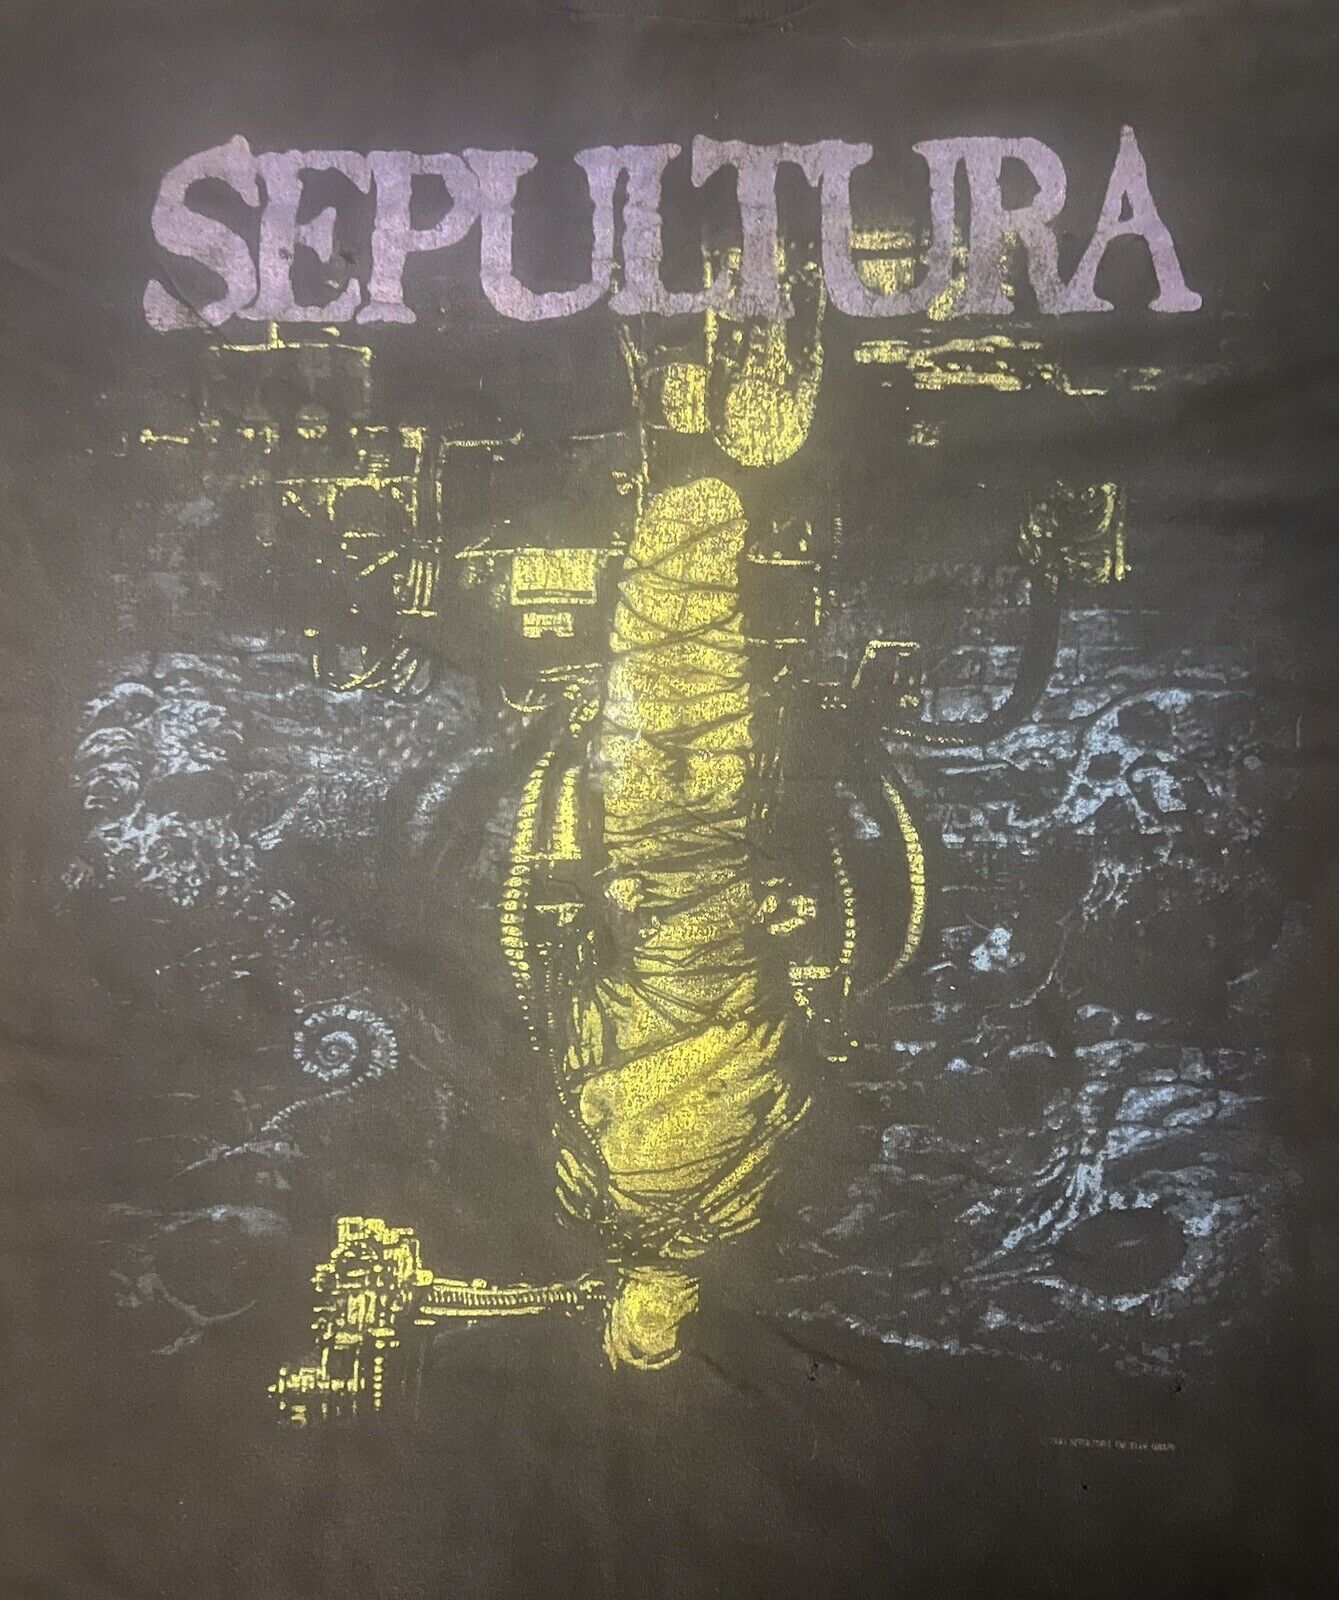 Sepultura Chaos Ad 1993 Tour